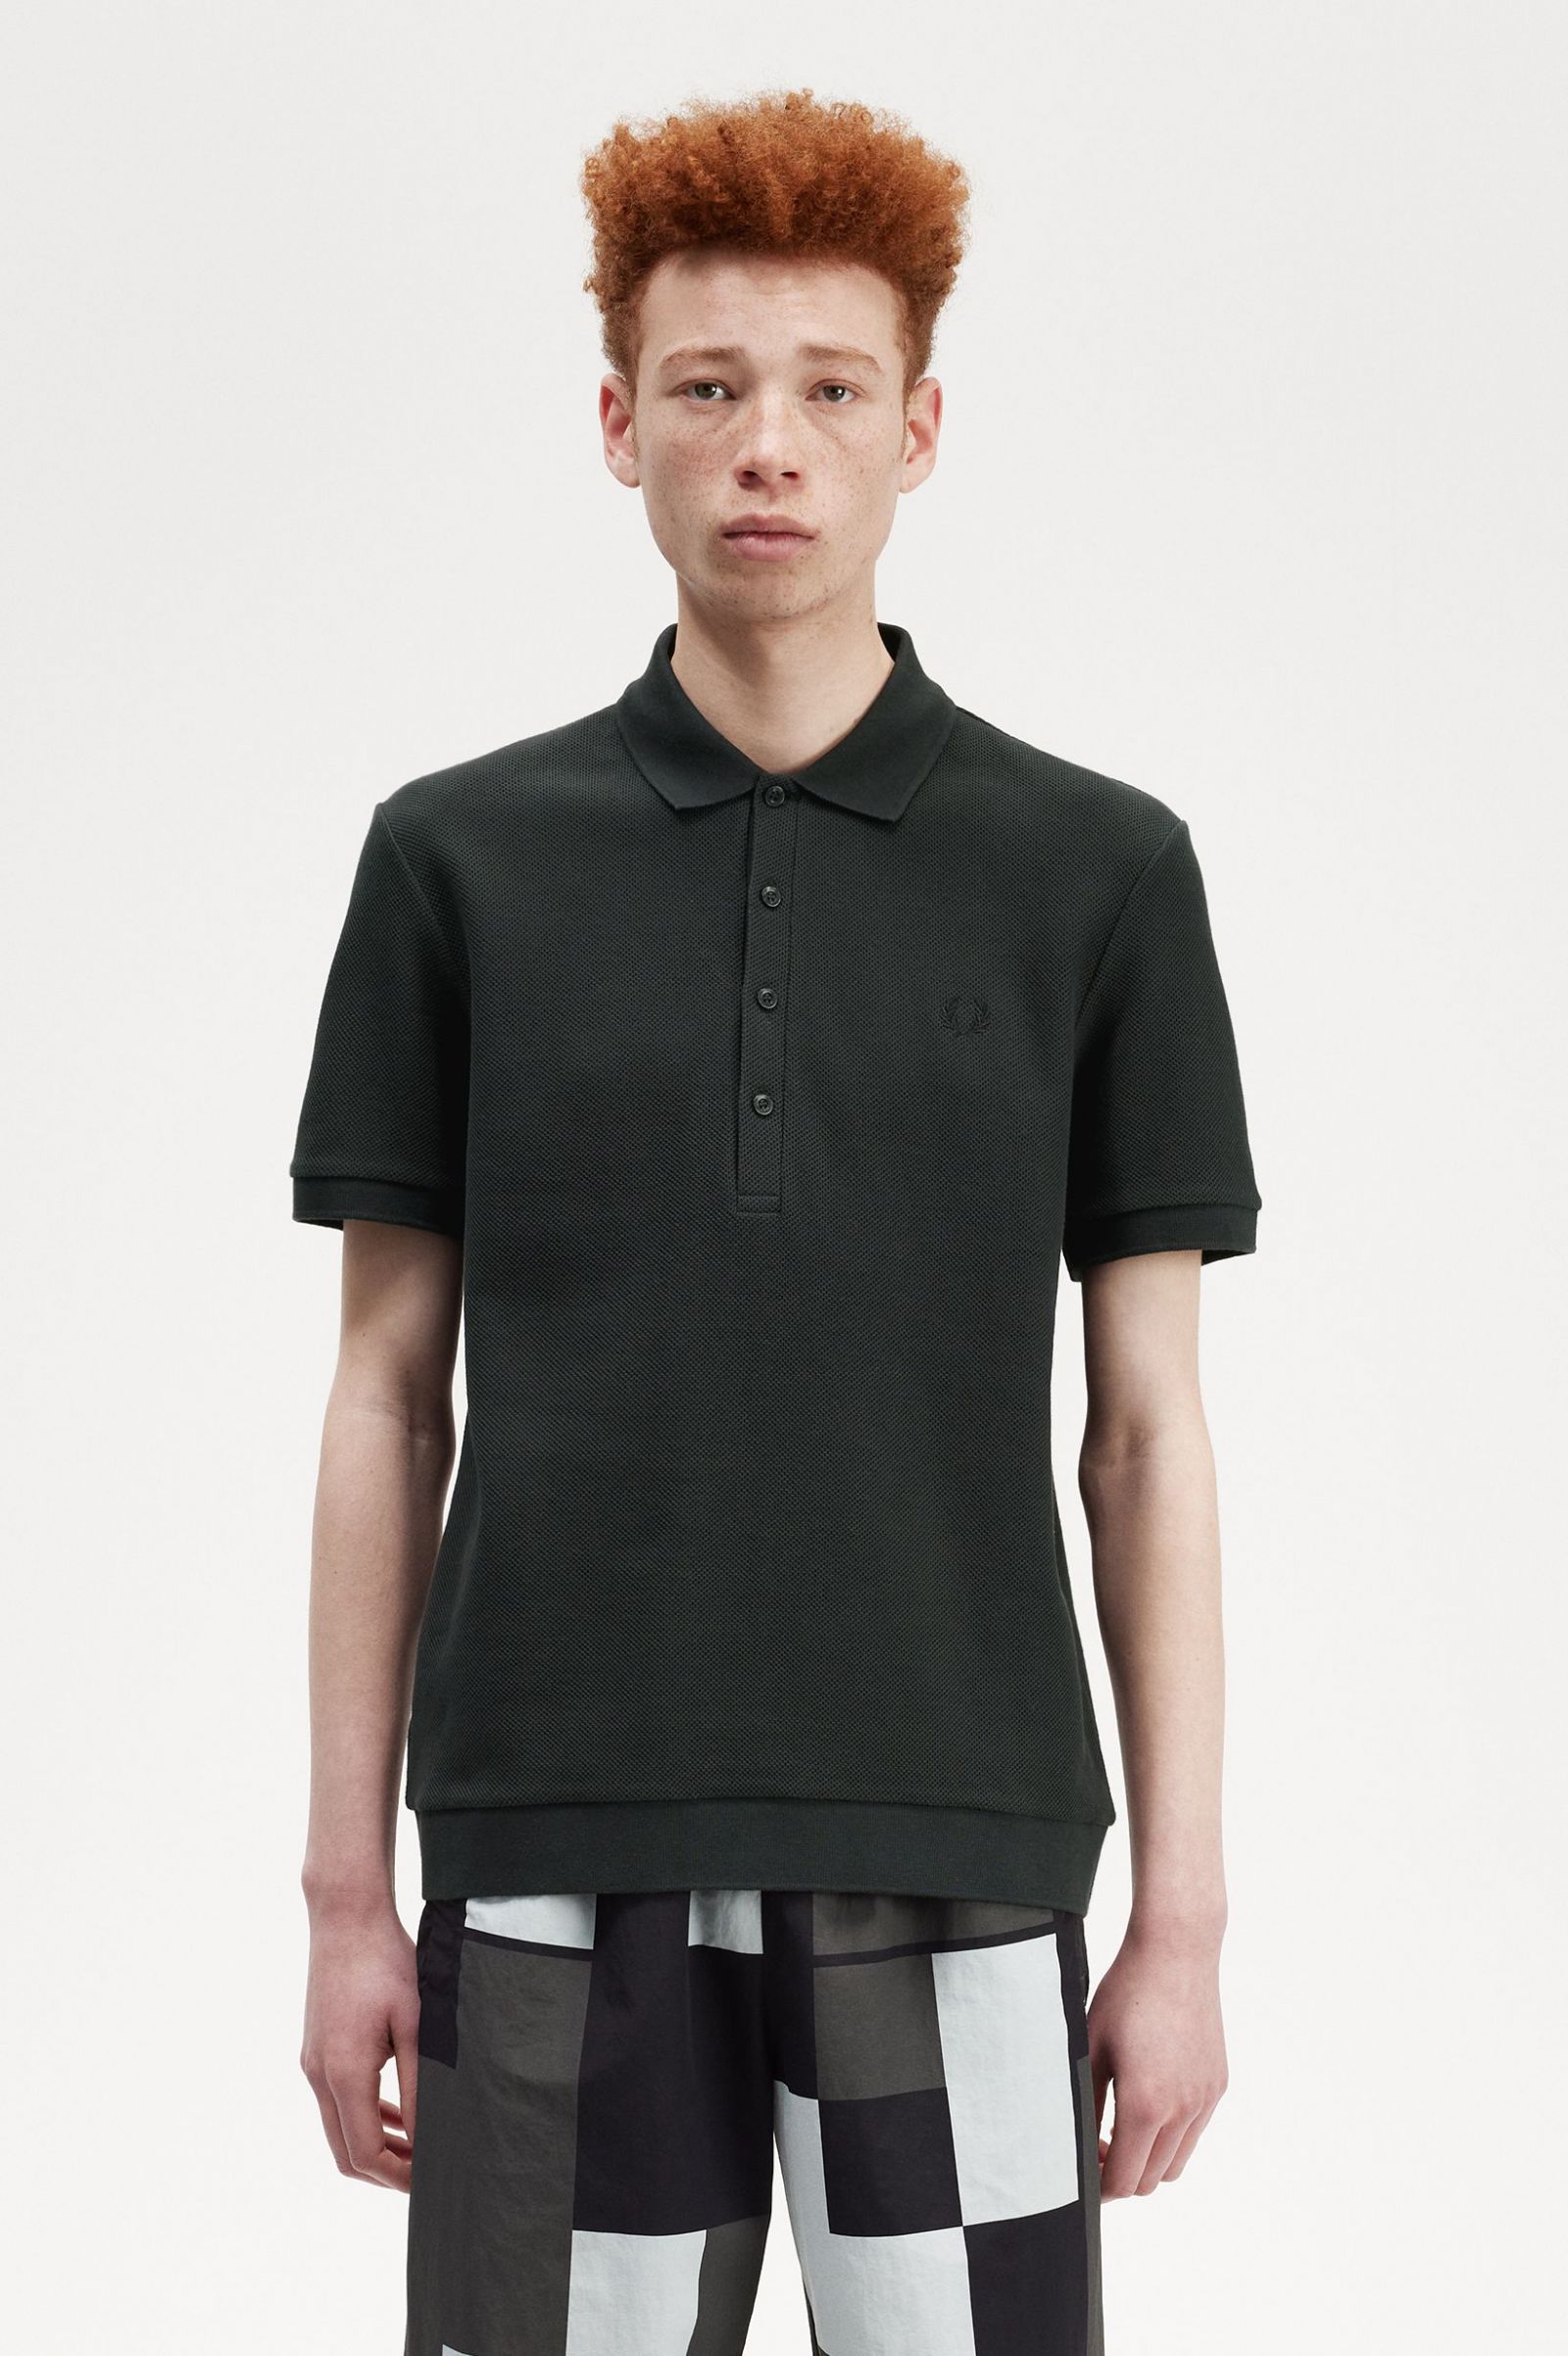 Honeycomb Cotton Polo Shirt - Night Green | Men's Polo Shirts | Short ...